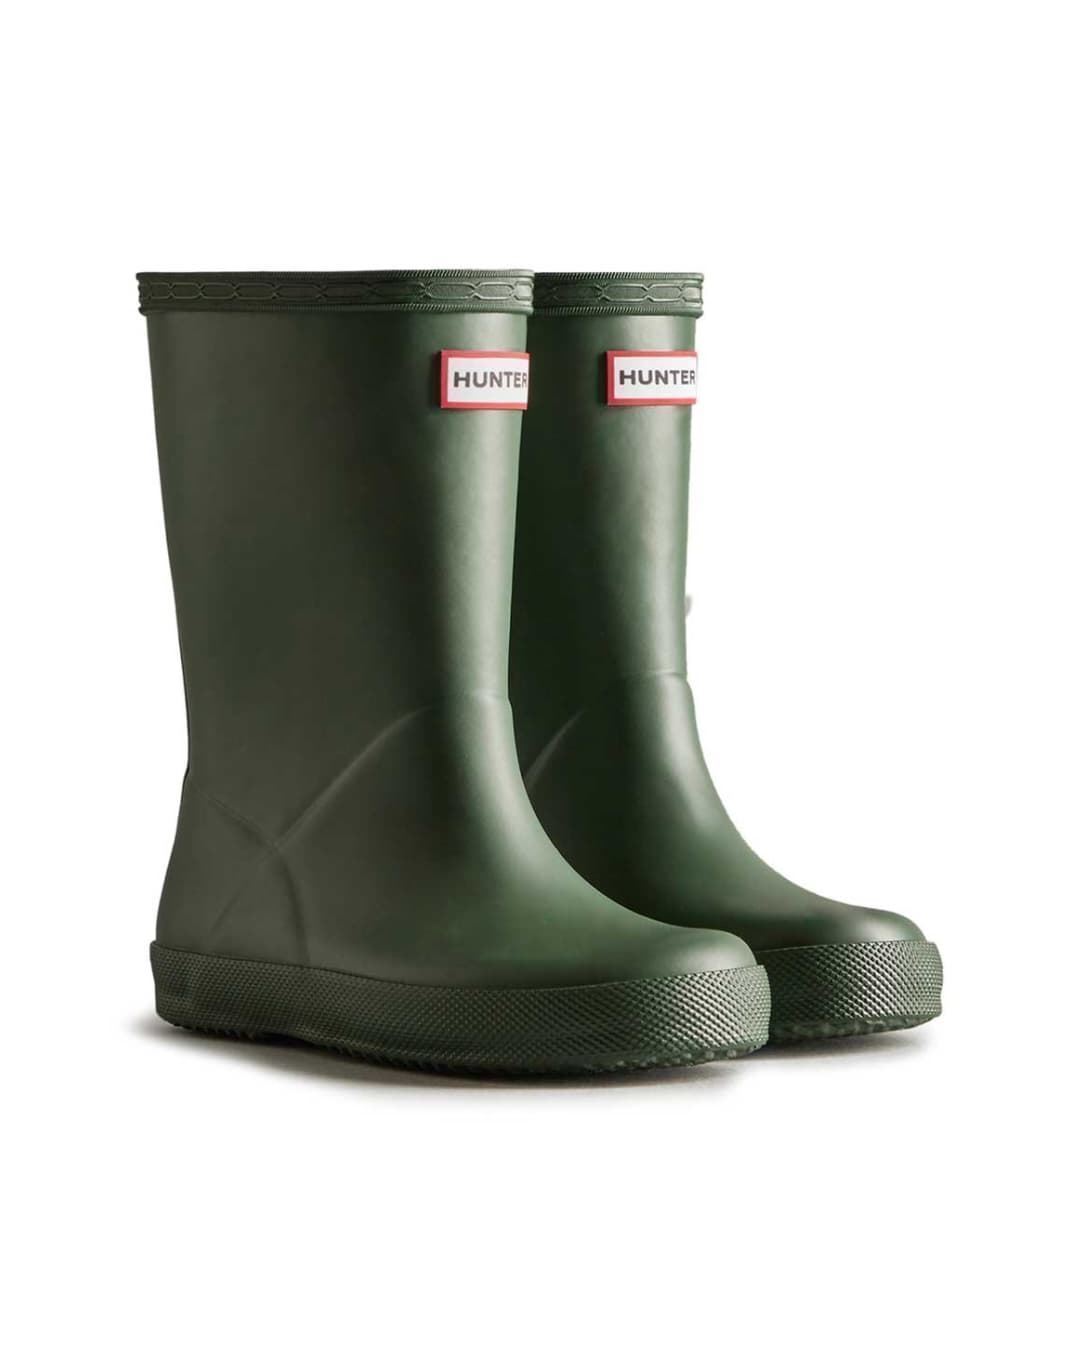 Hunter Children's Rain Boots First Green - Image 1